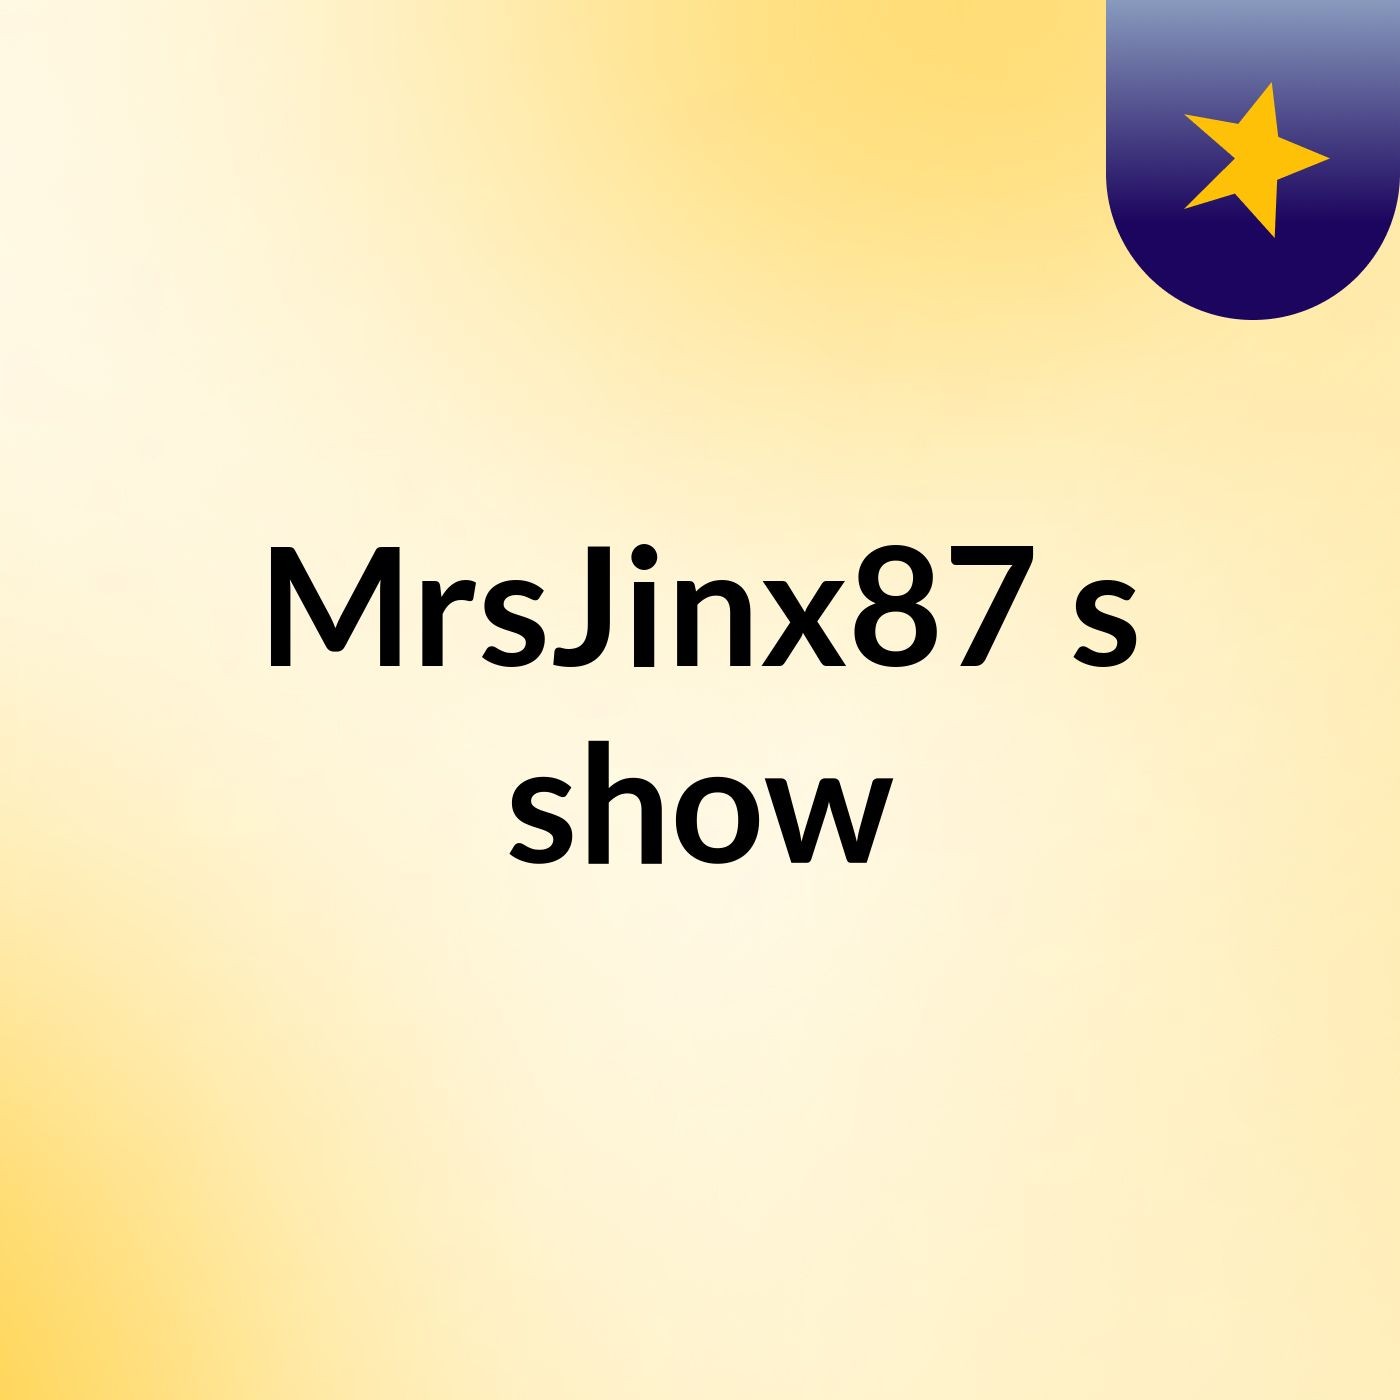 MrsJinx87's show